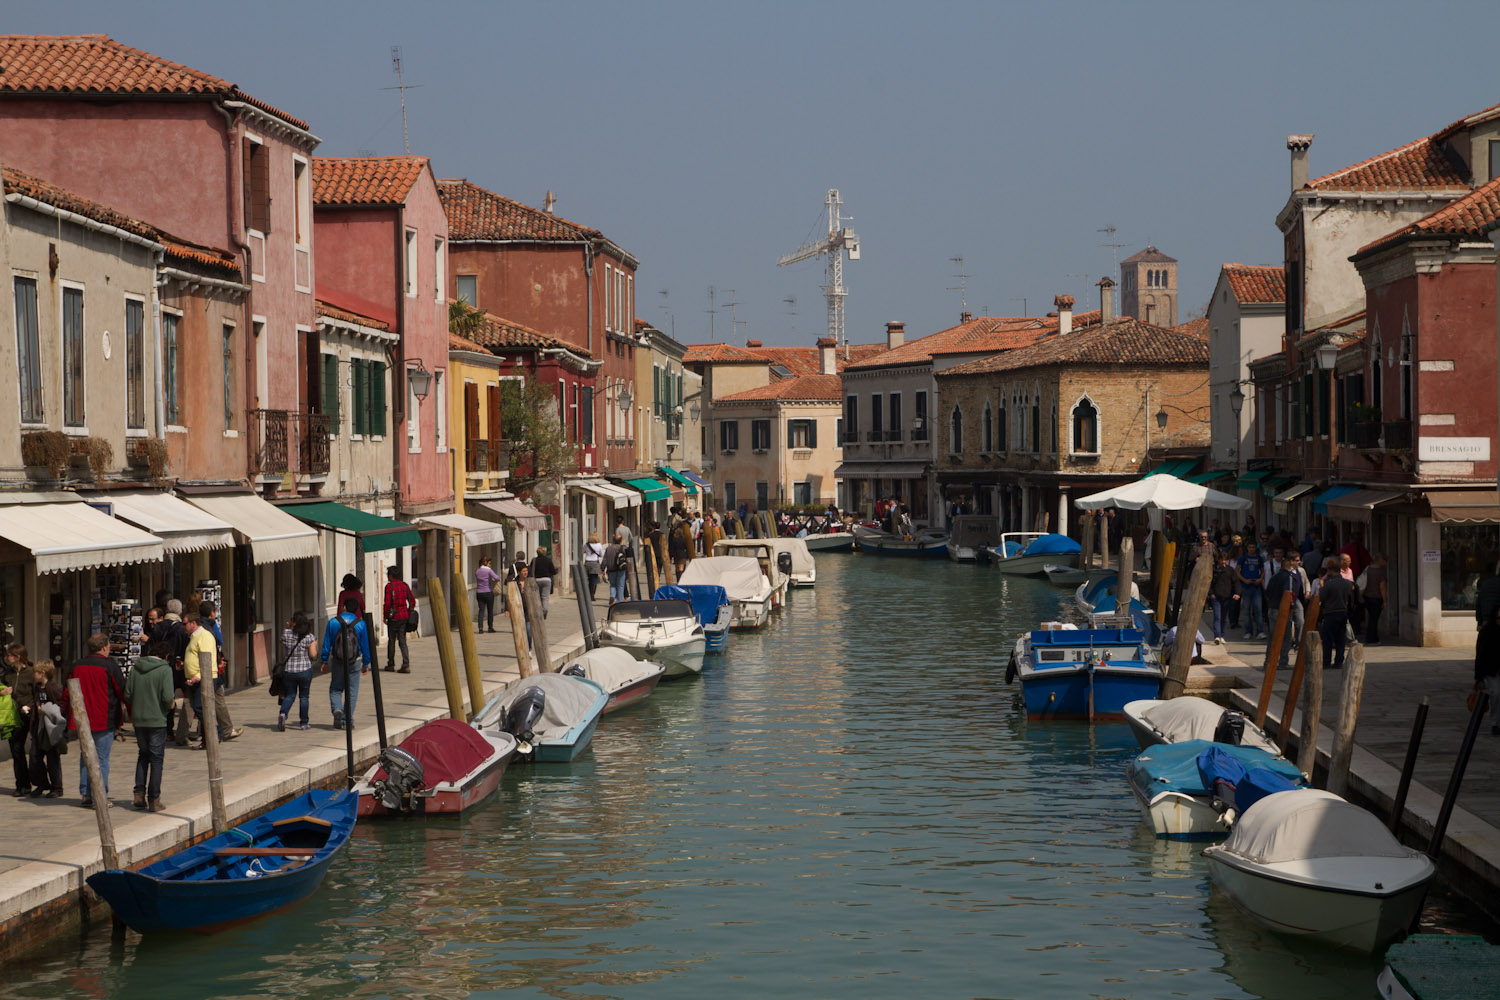 Vista del canal principal de Murano, Italia